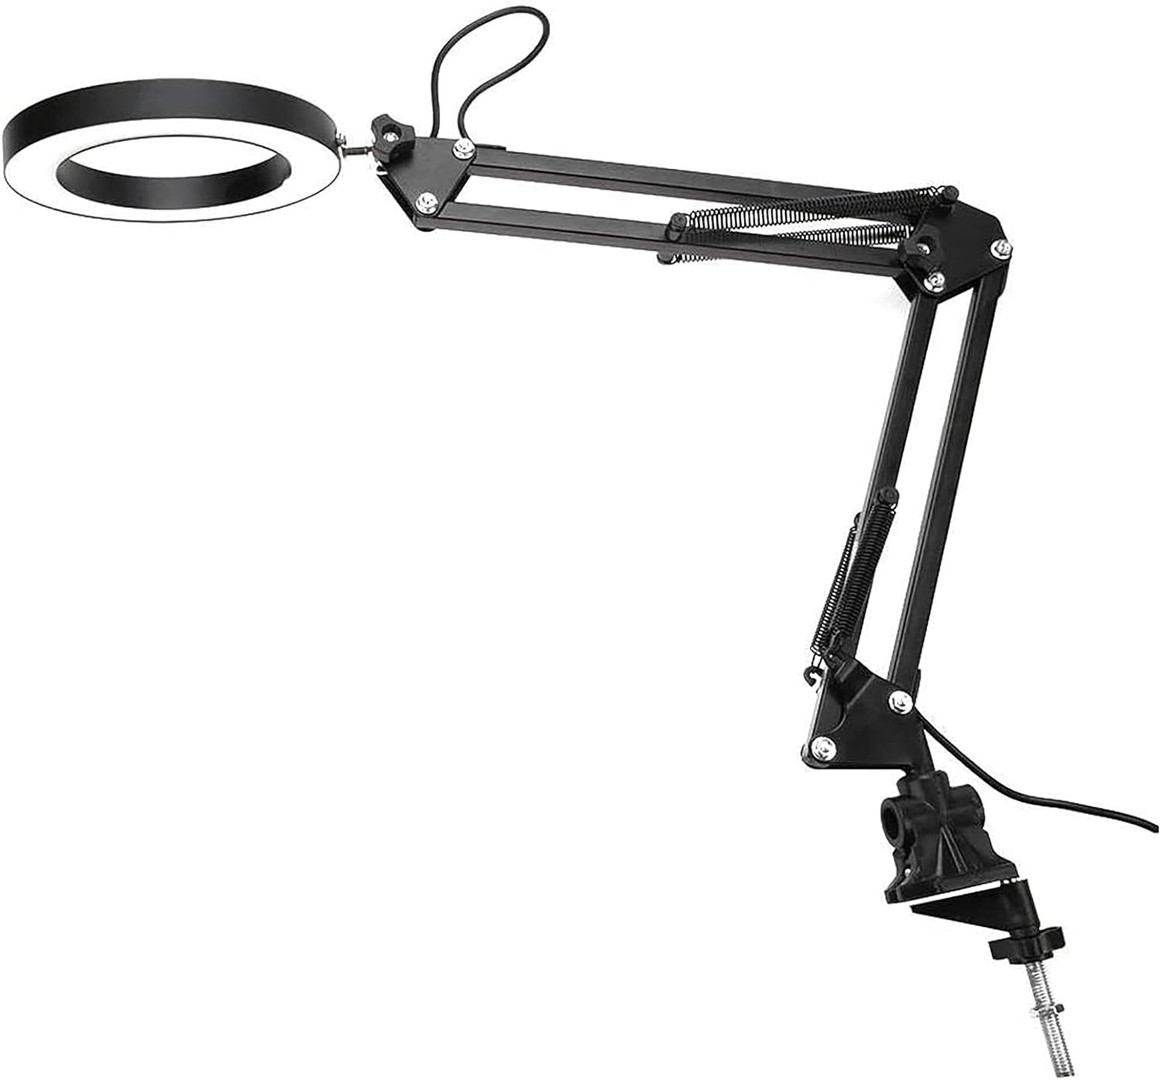 accesorios para electronica - Lámpara de escritorio con base y clip, regulable flexible de bajo consumo 5